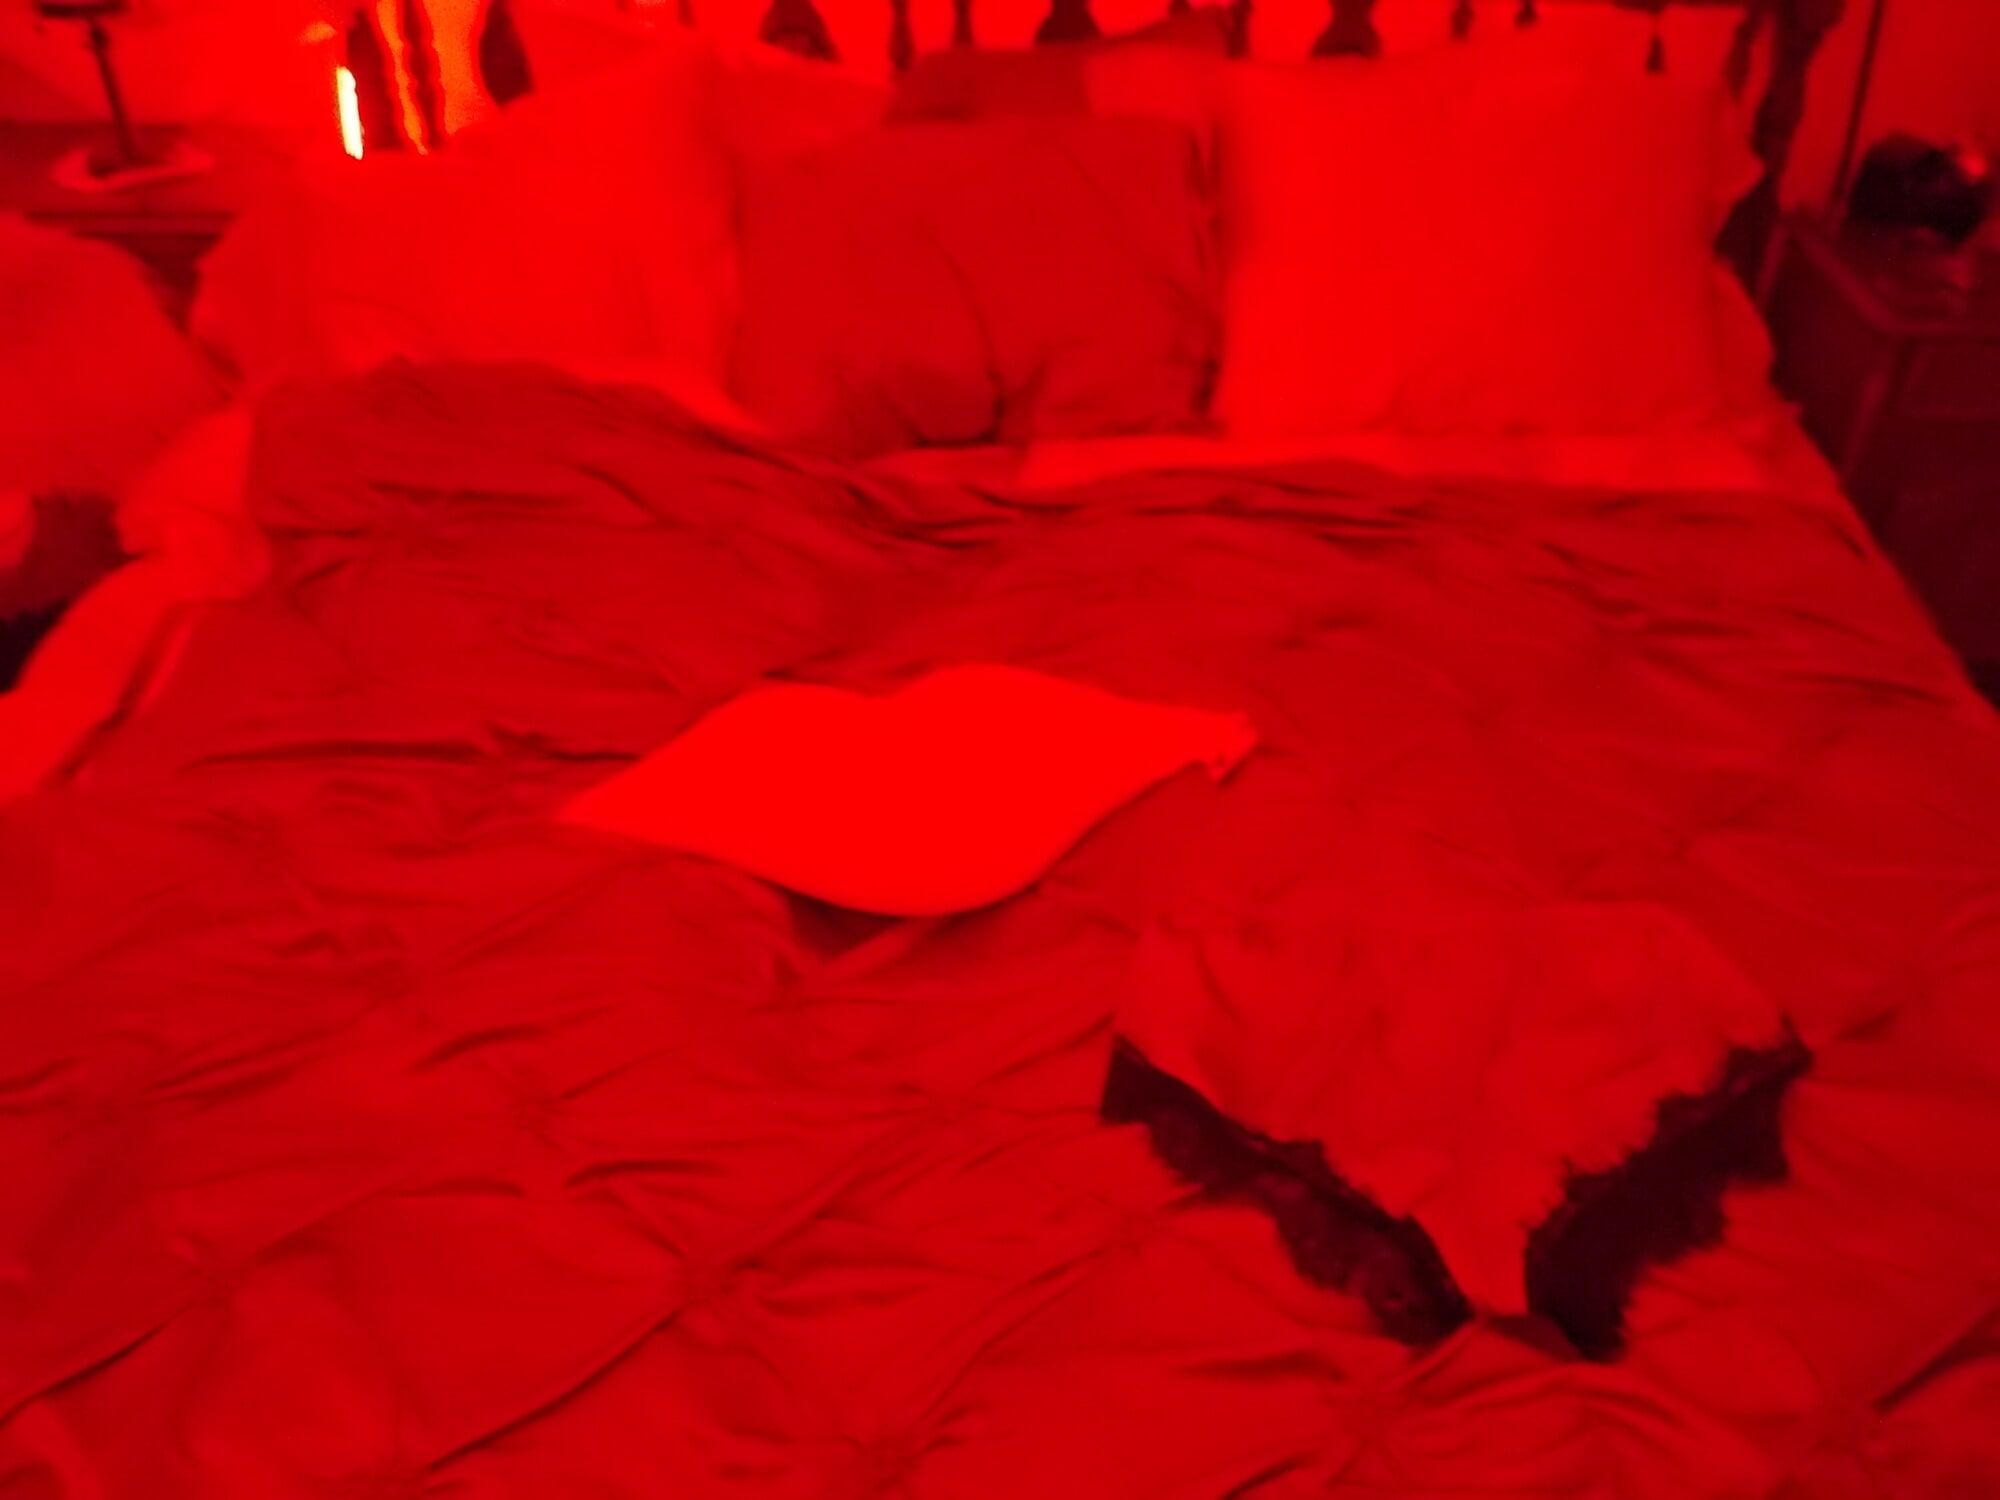 IN MY BEDROOM IN RED LIGHT. #11